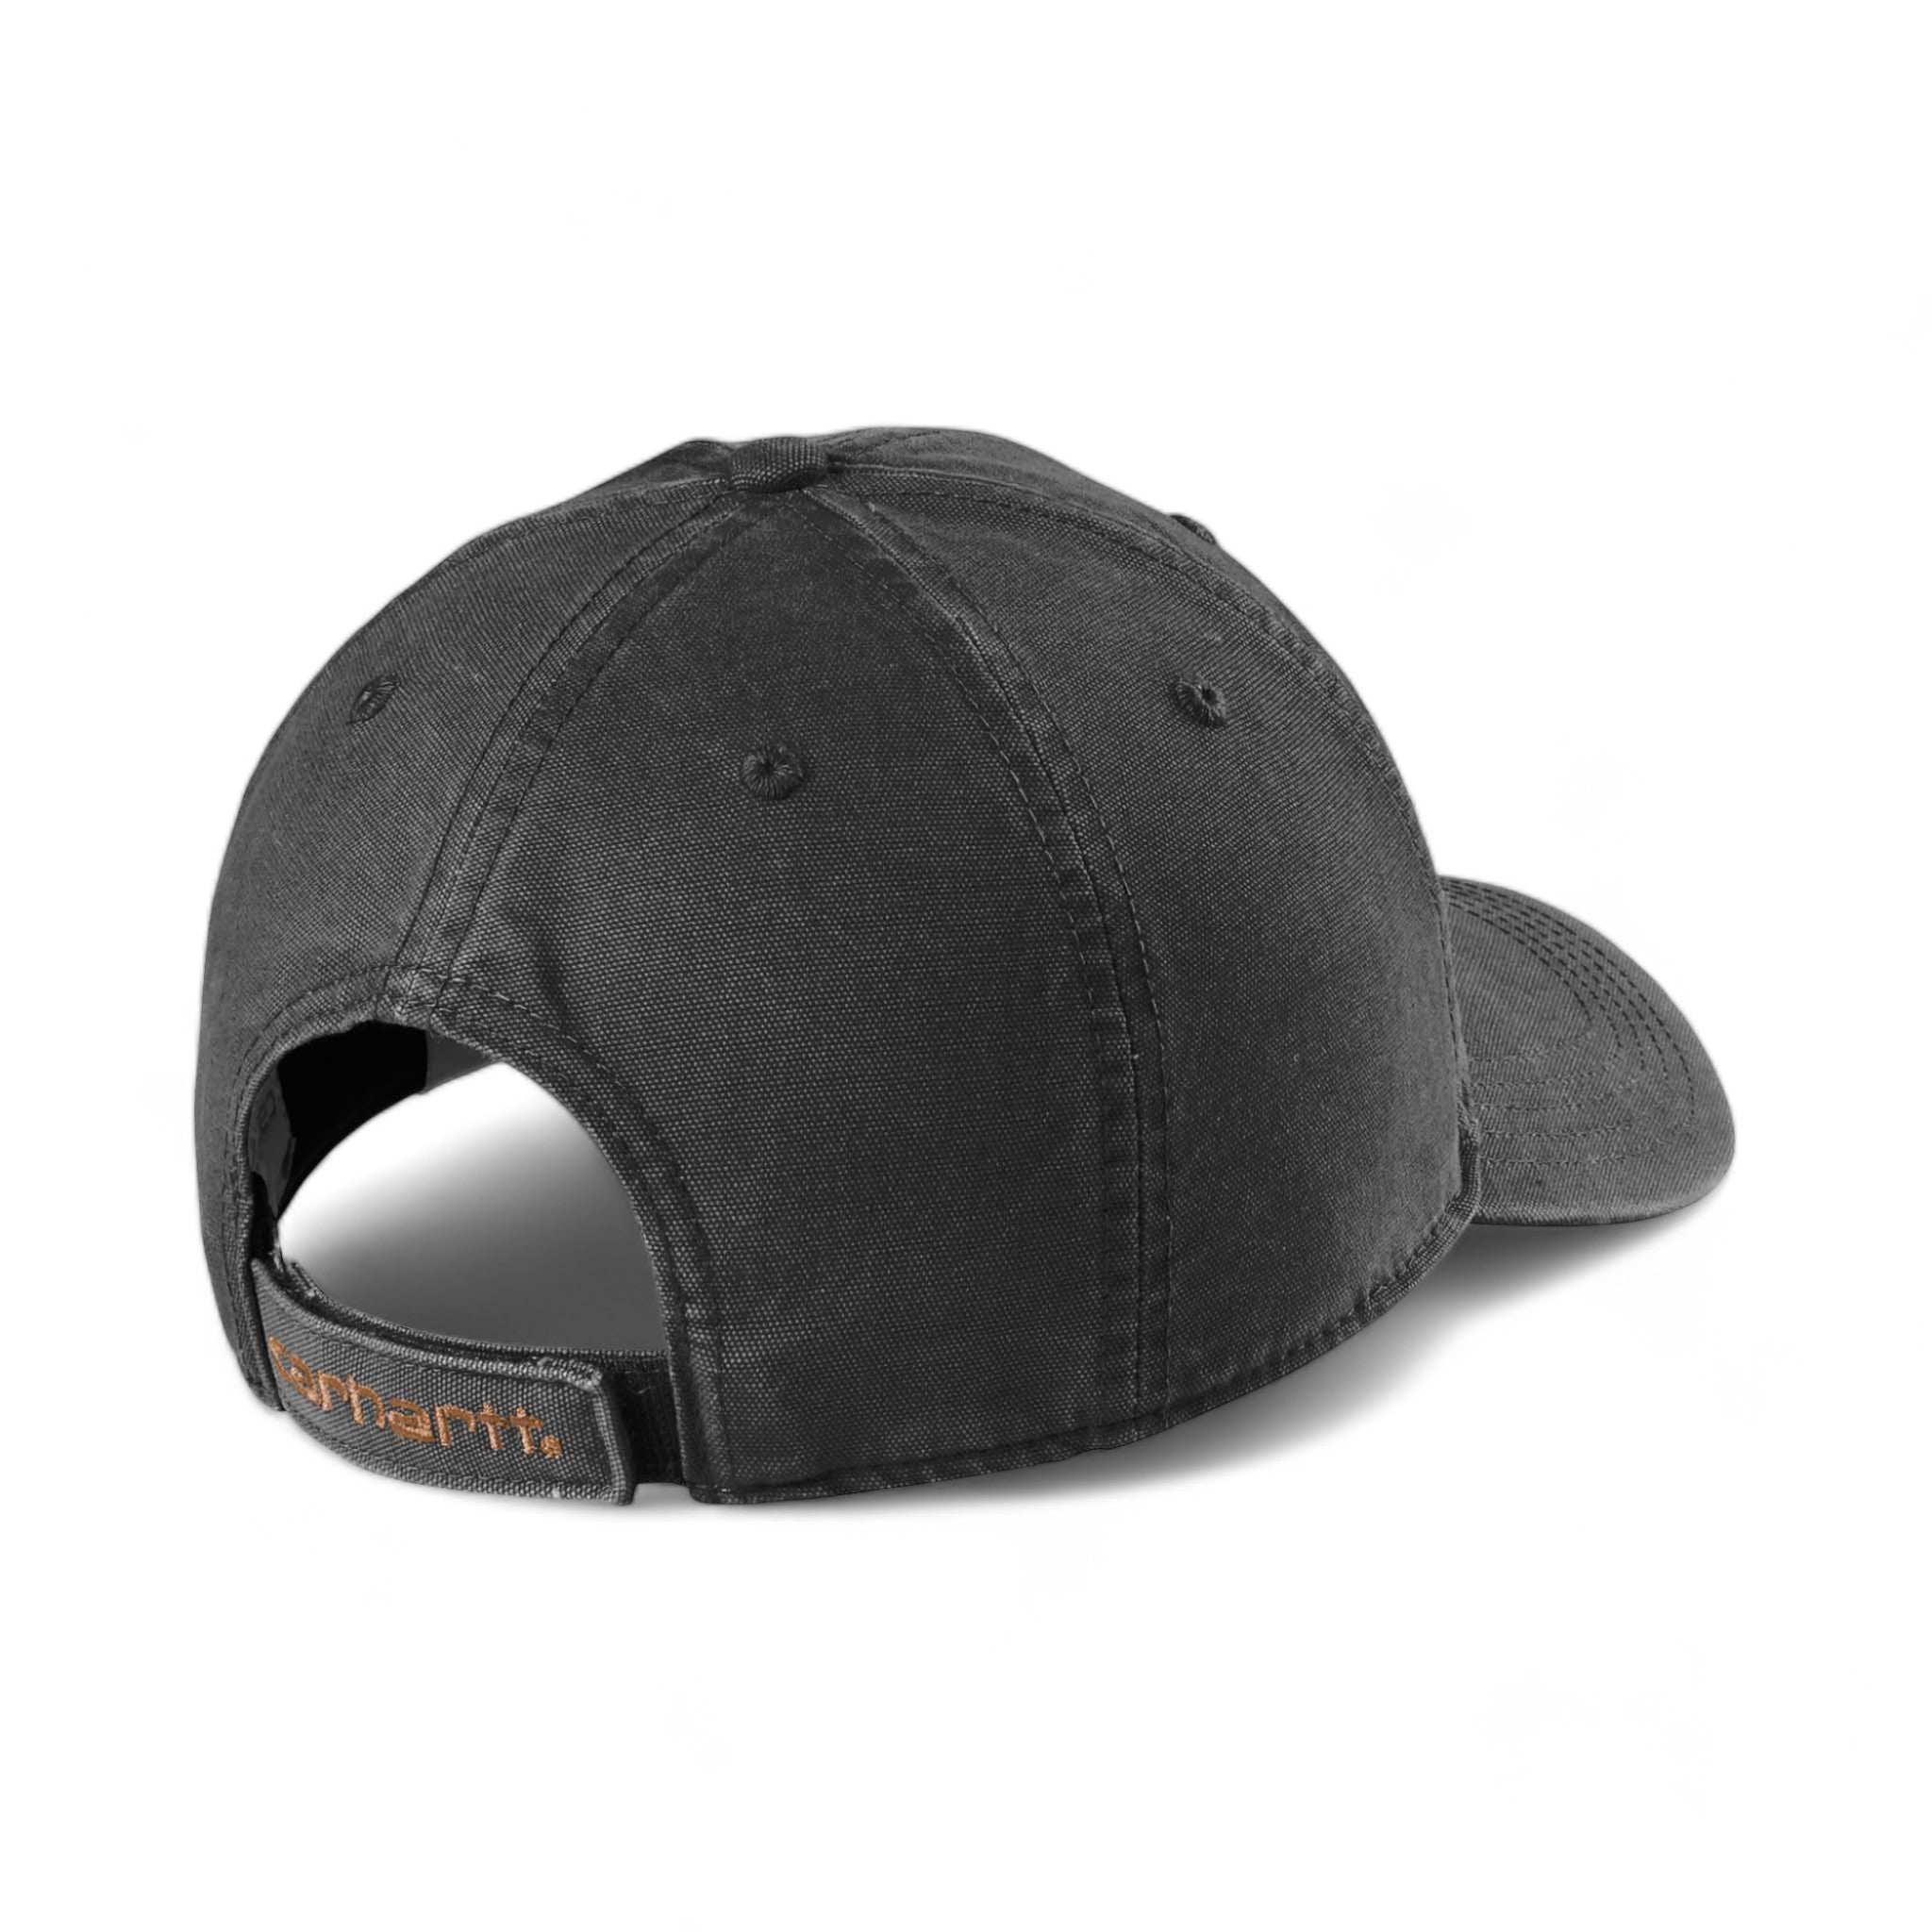 Back view of Carhartt CT103938 custom hat in black